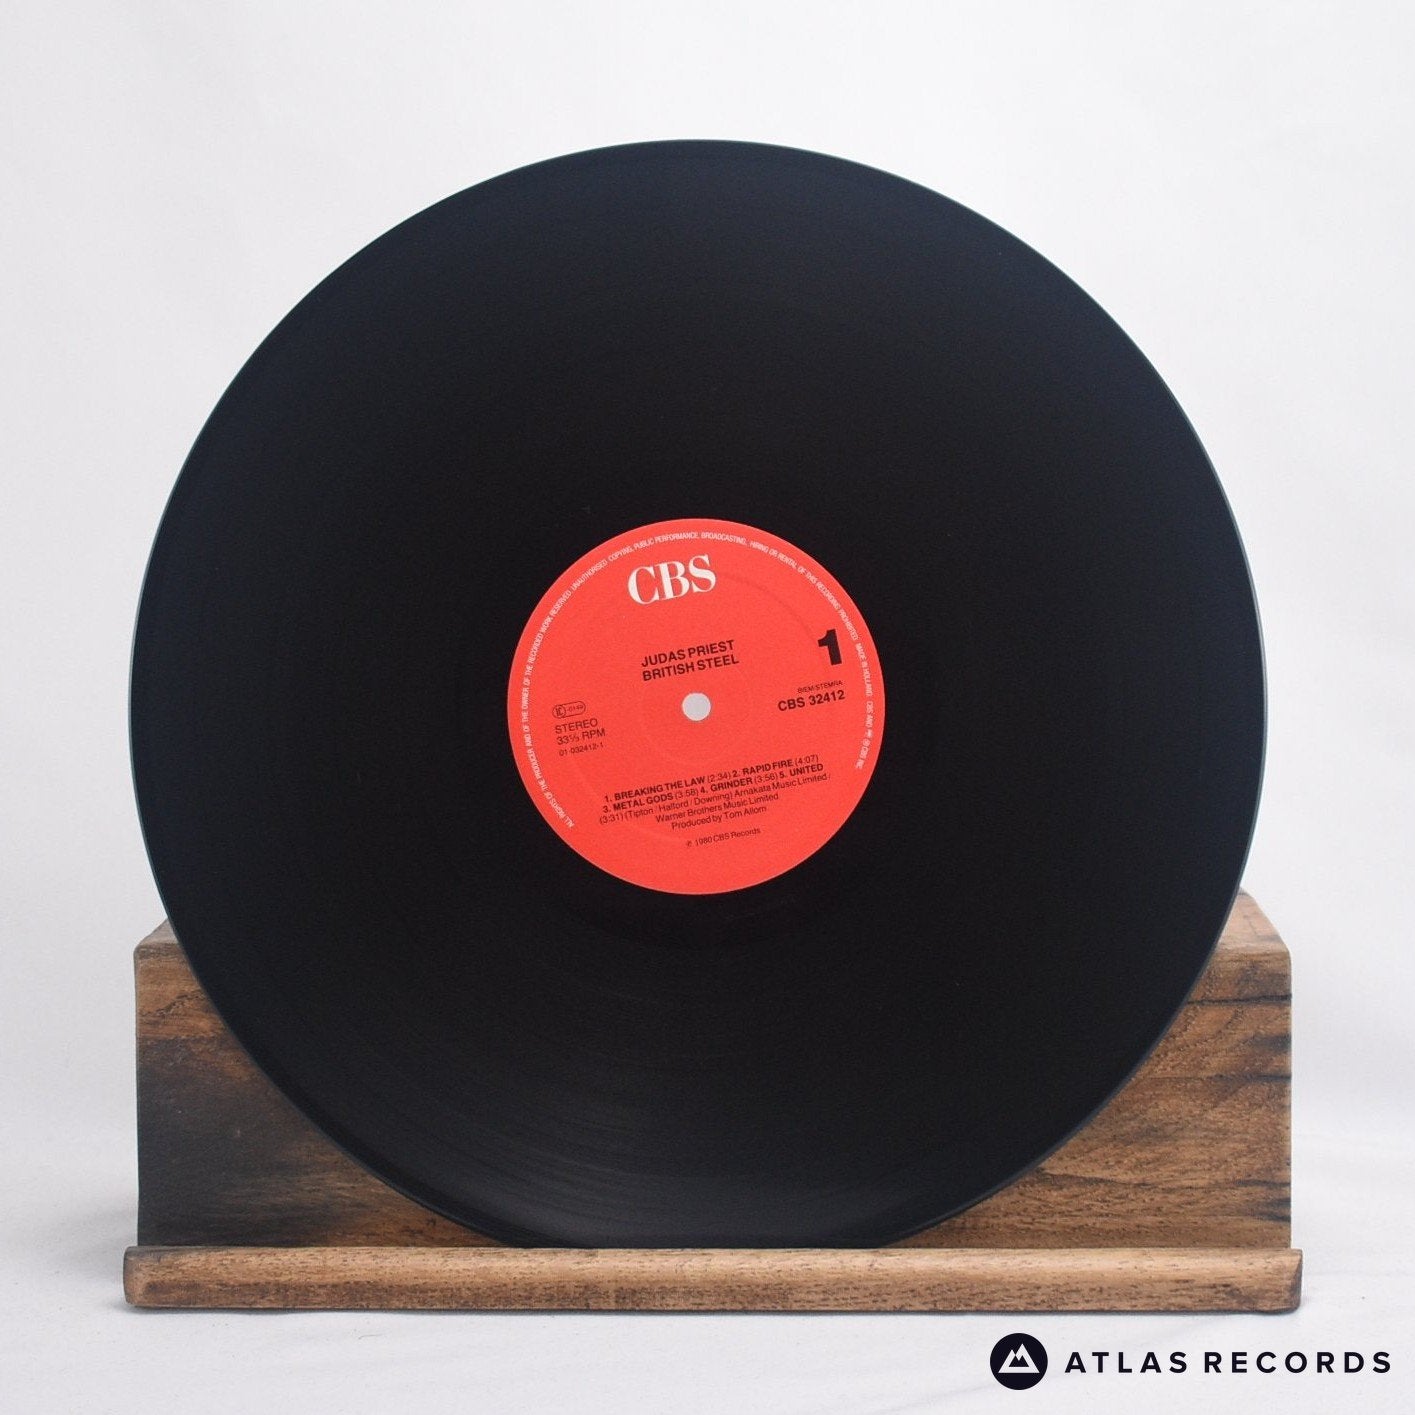 We Are Vinyl Judas Priest - British Steel - LP